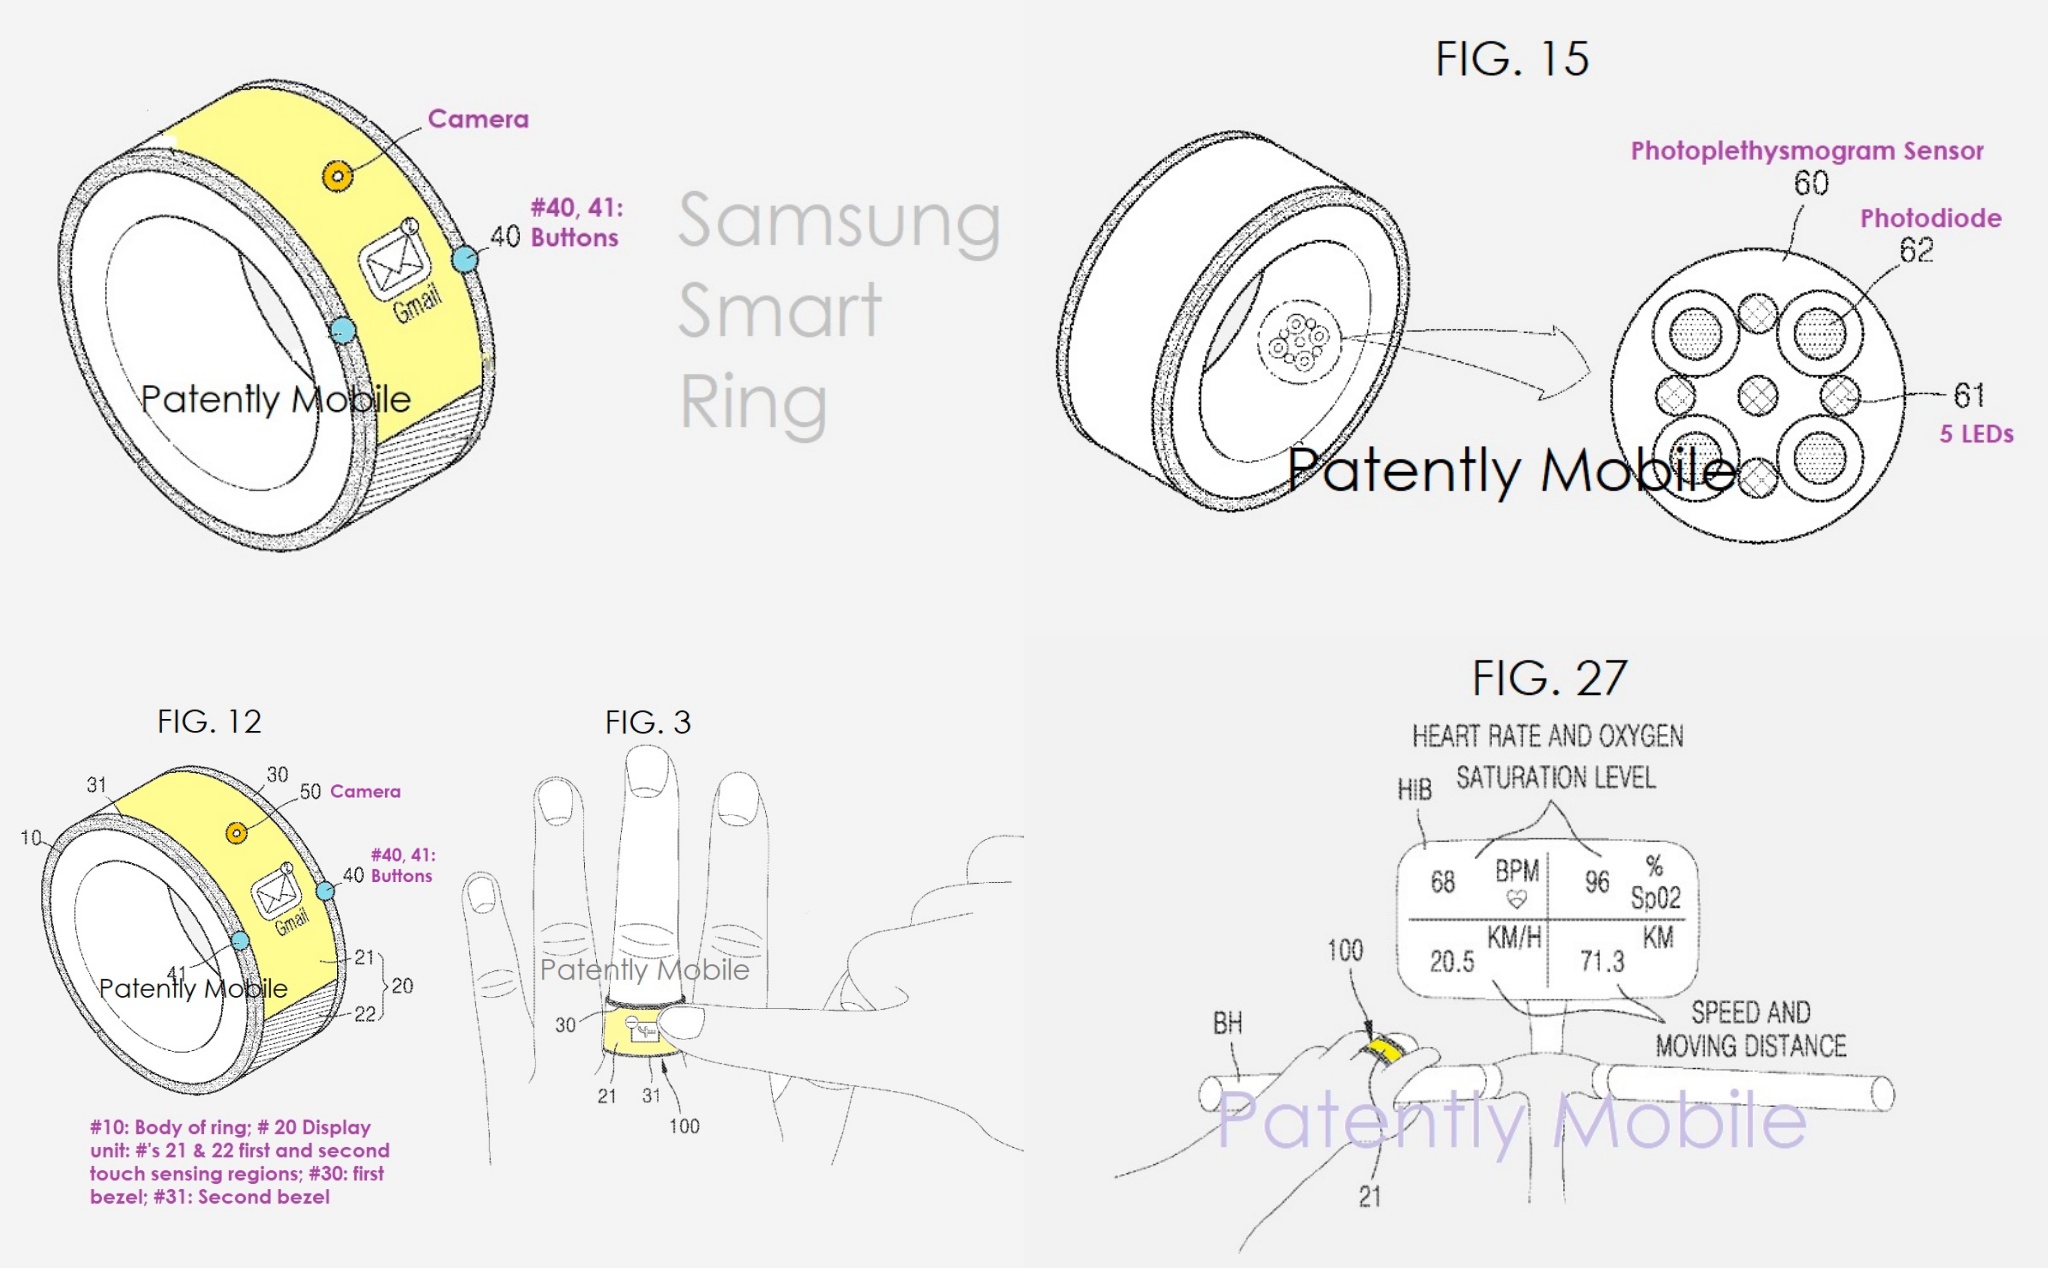 Samsung SmartRing